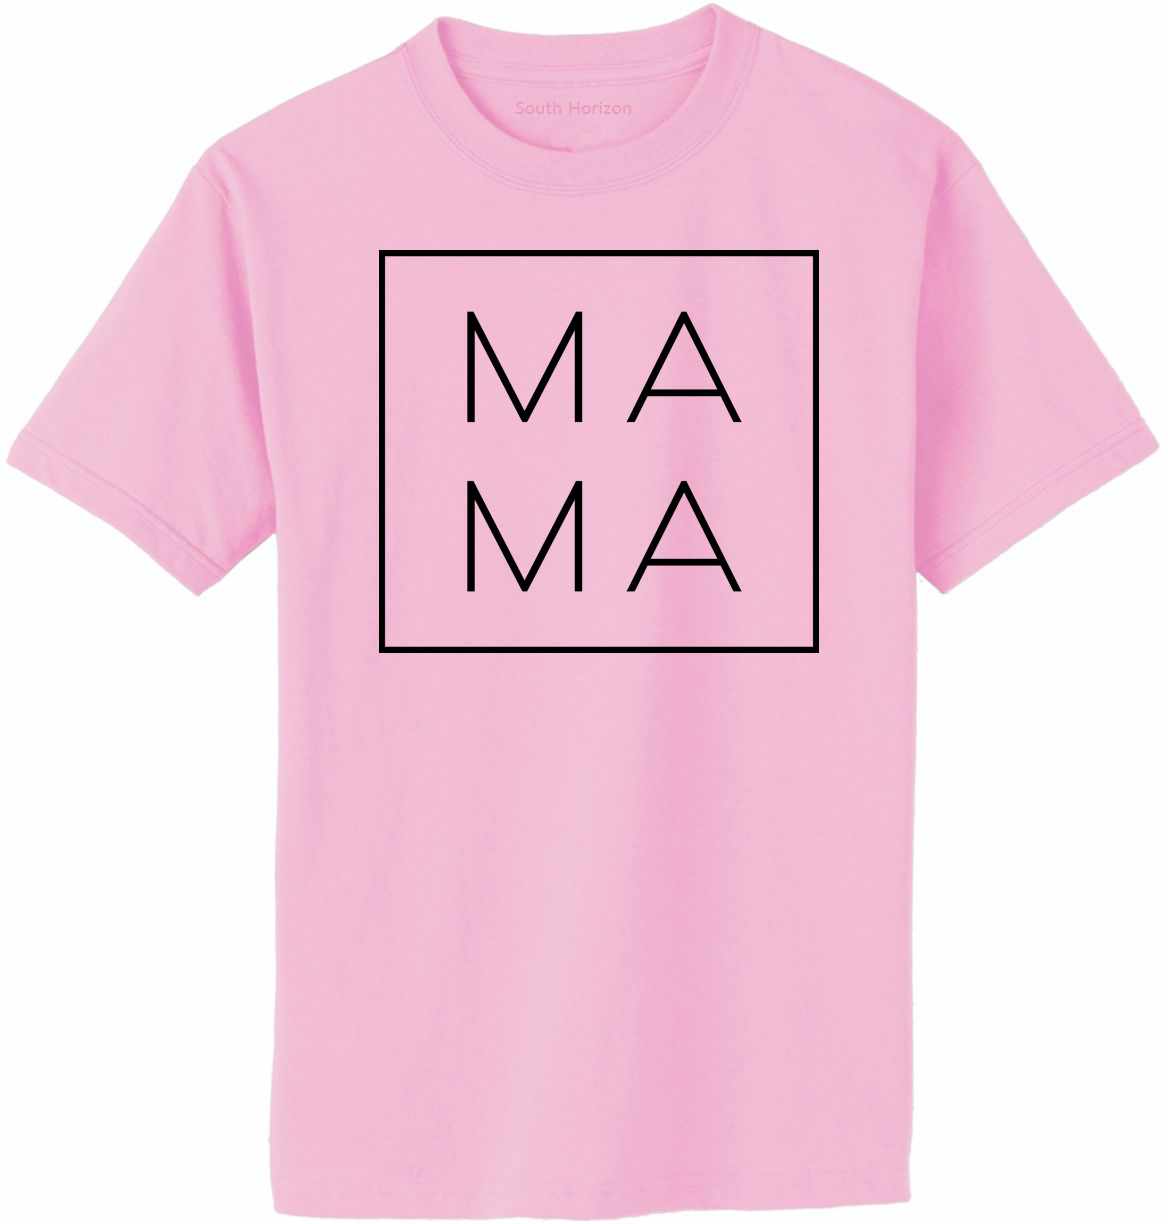 MA MA - Box on Adult T-Shirt